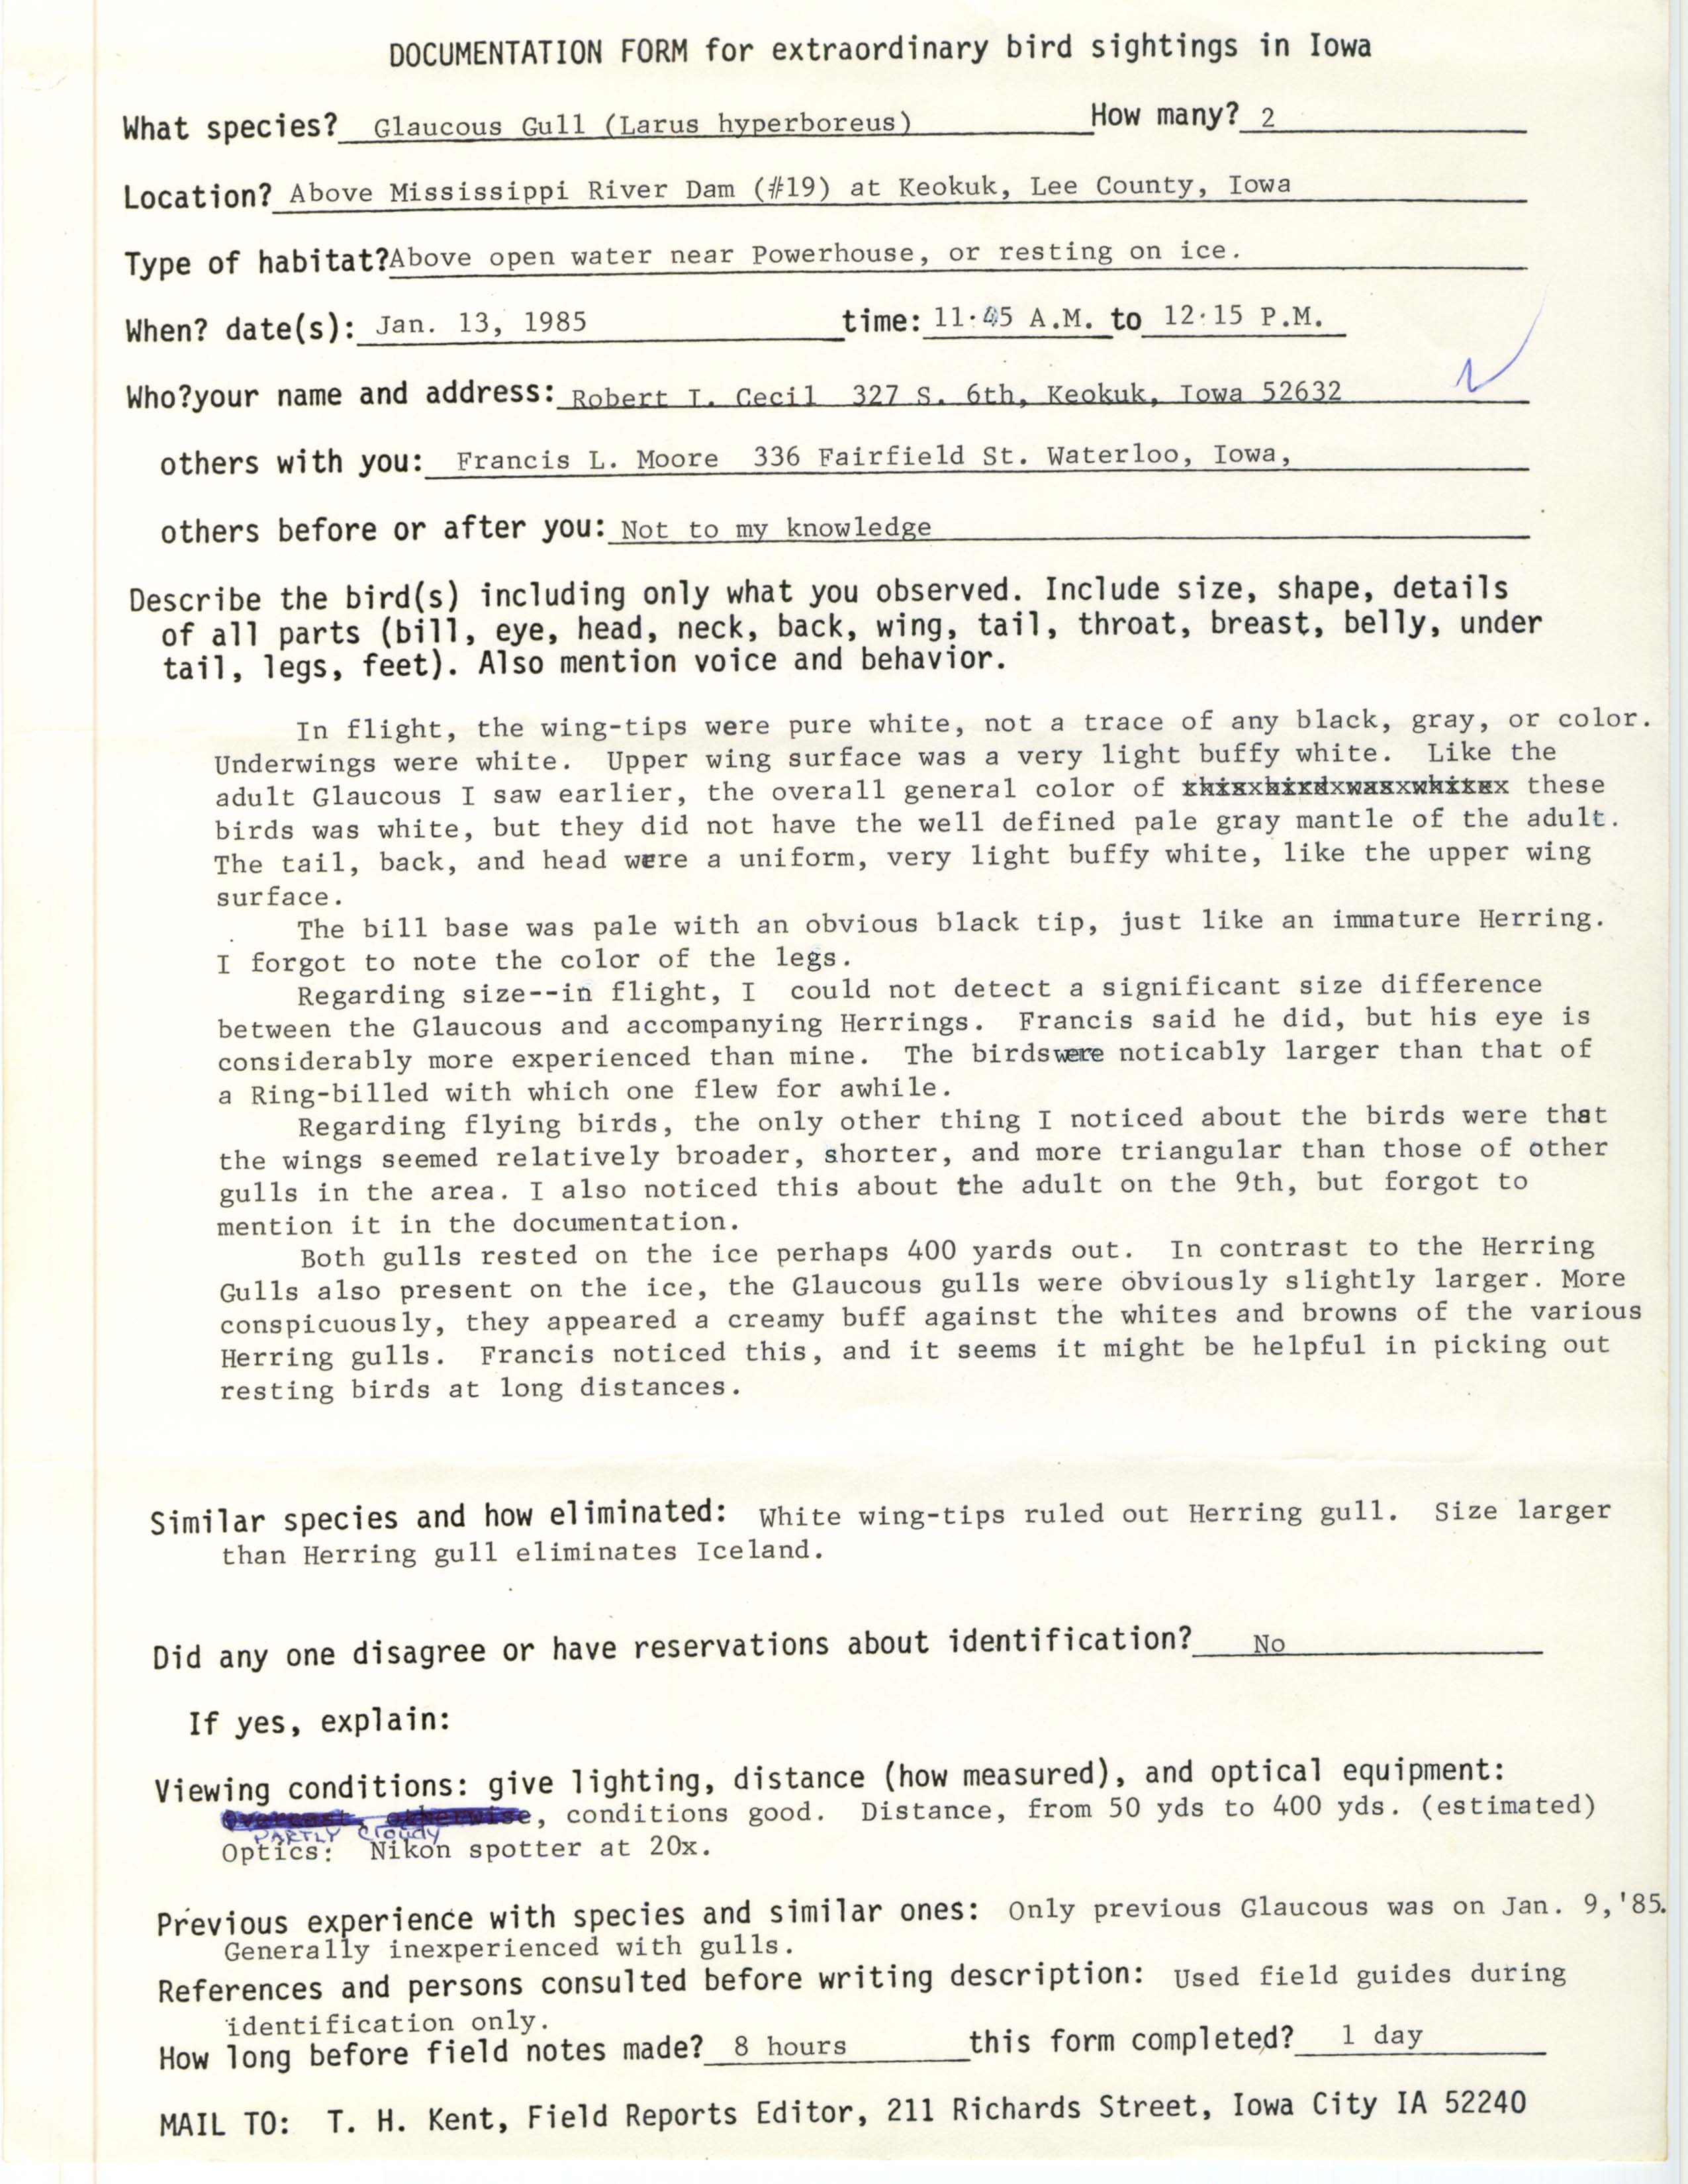 Rare bird documentation form for Glaucous Gull at Lock and Dam 19 near Keokuk, 1985